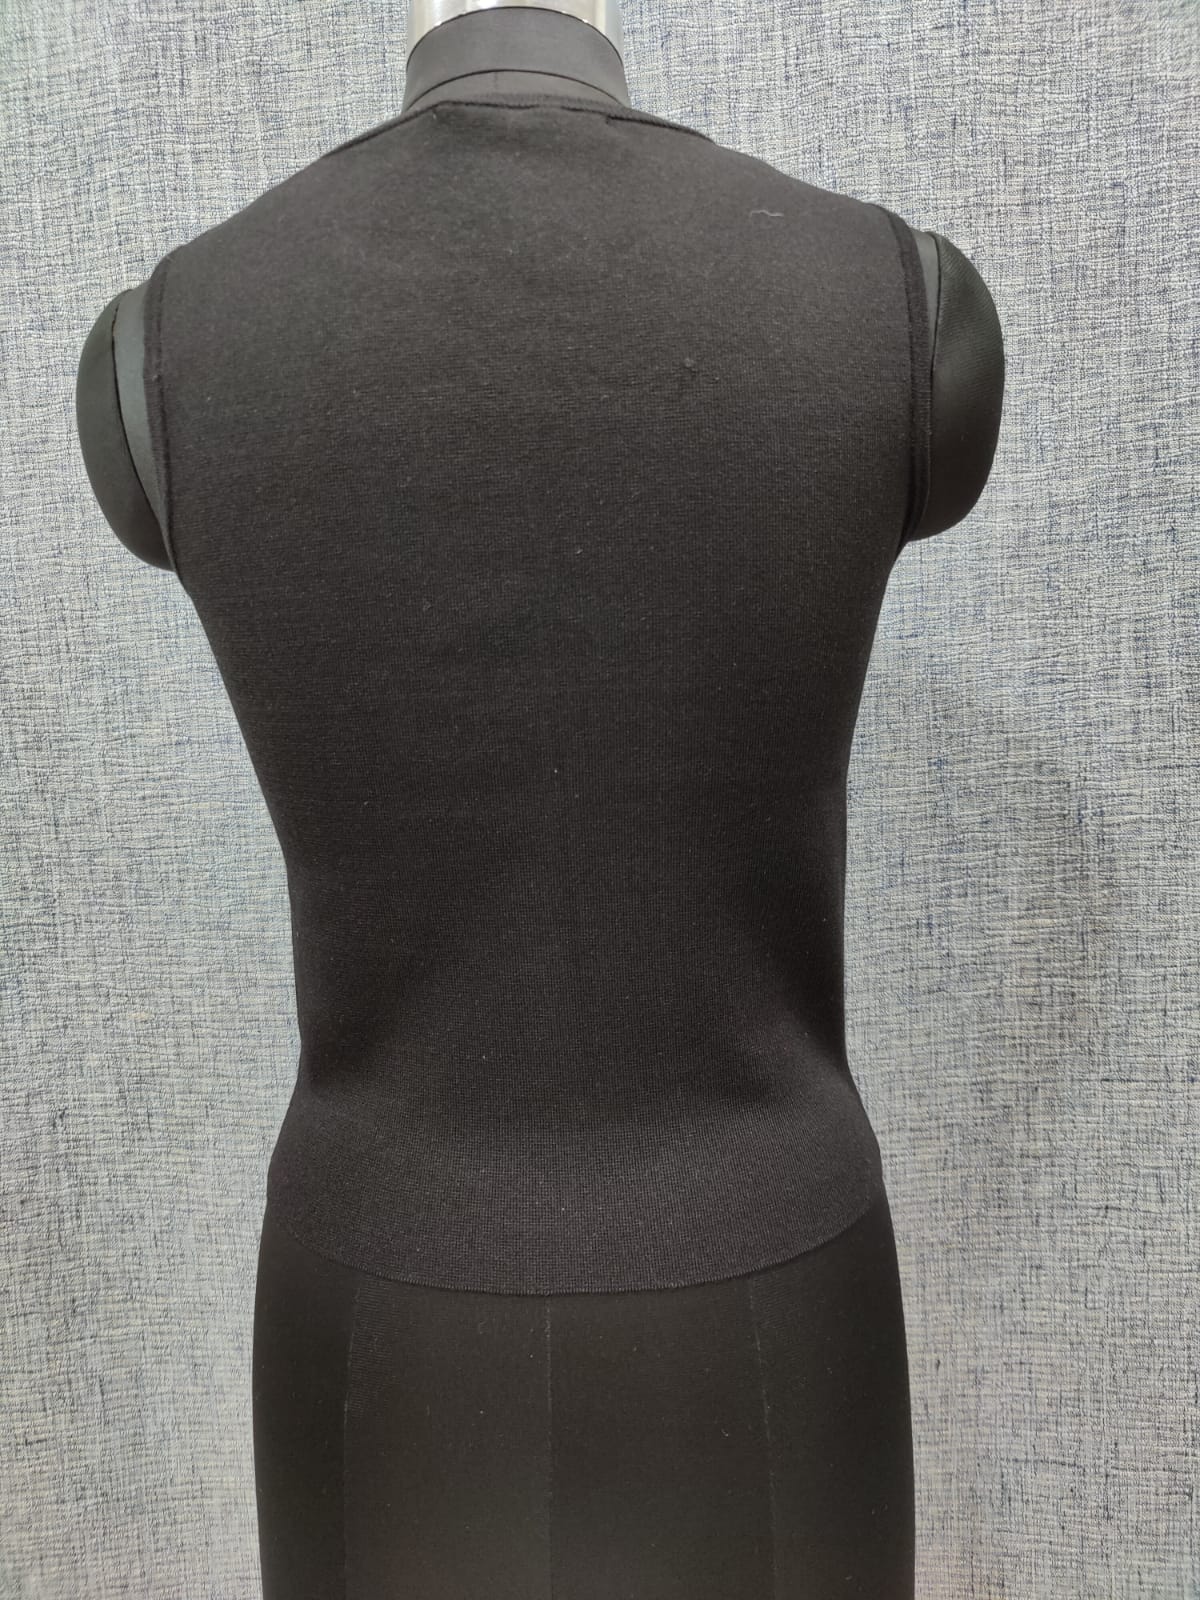 ZARA Black Sleeveless Top with Cutout Detail | Relove